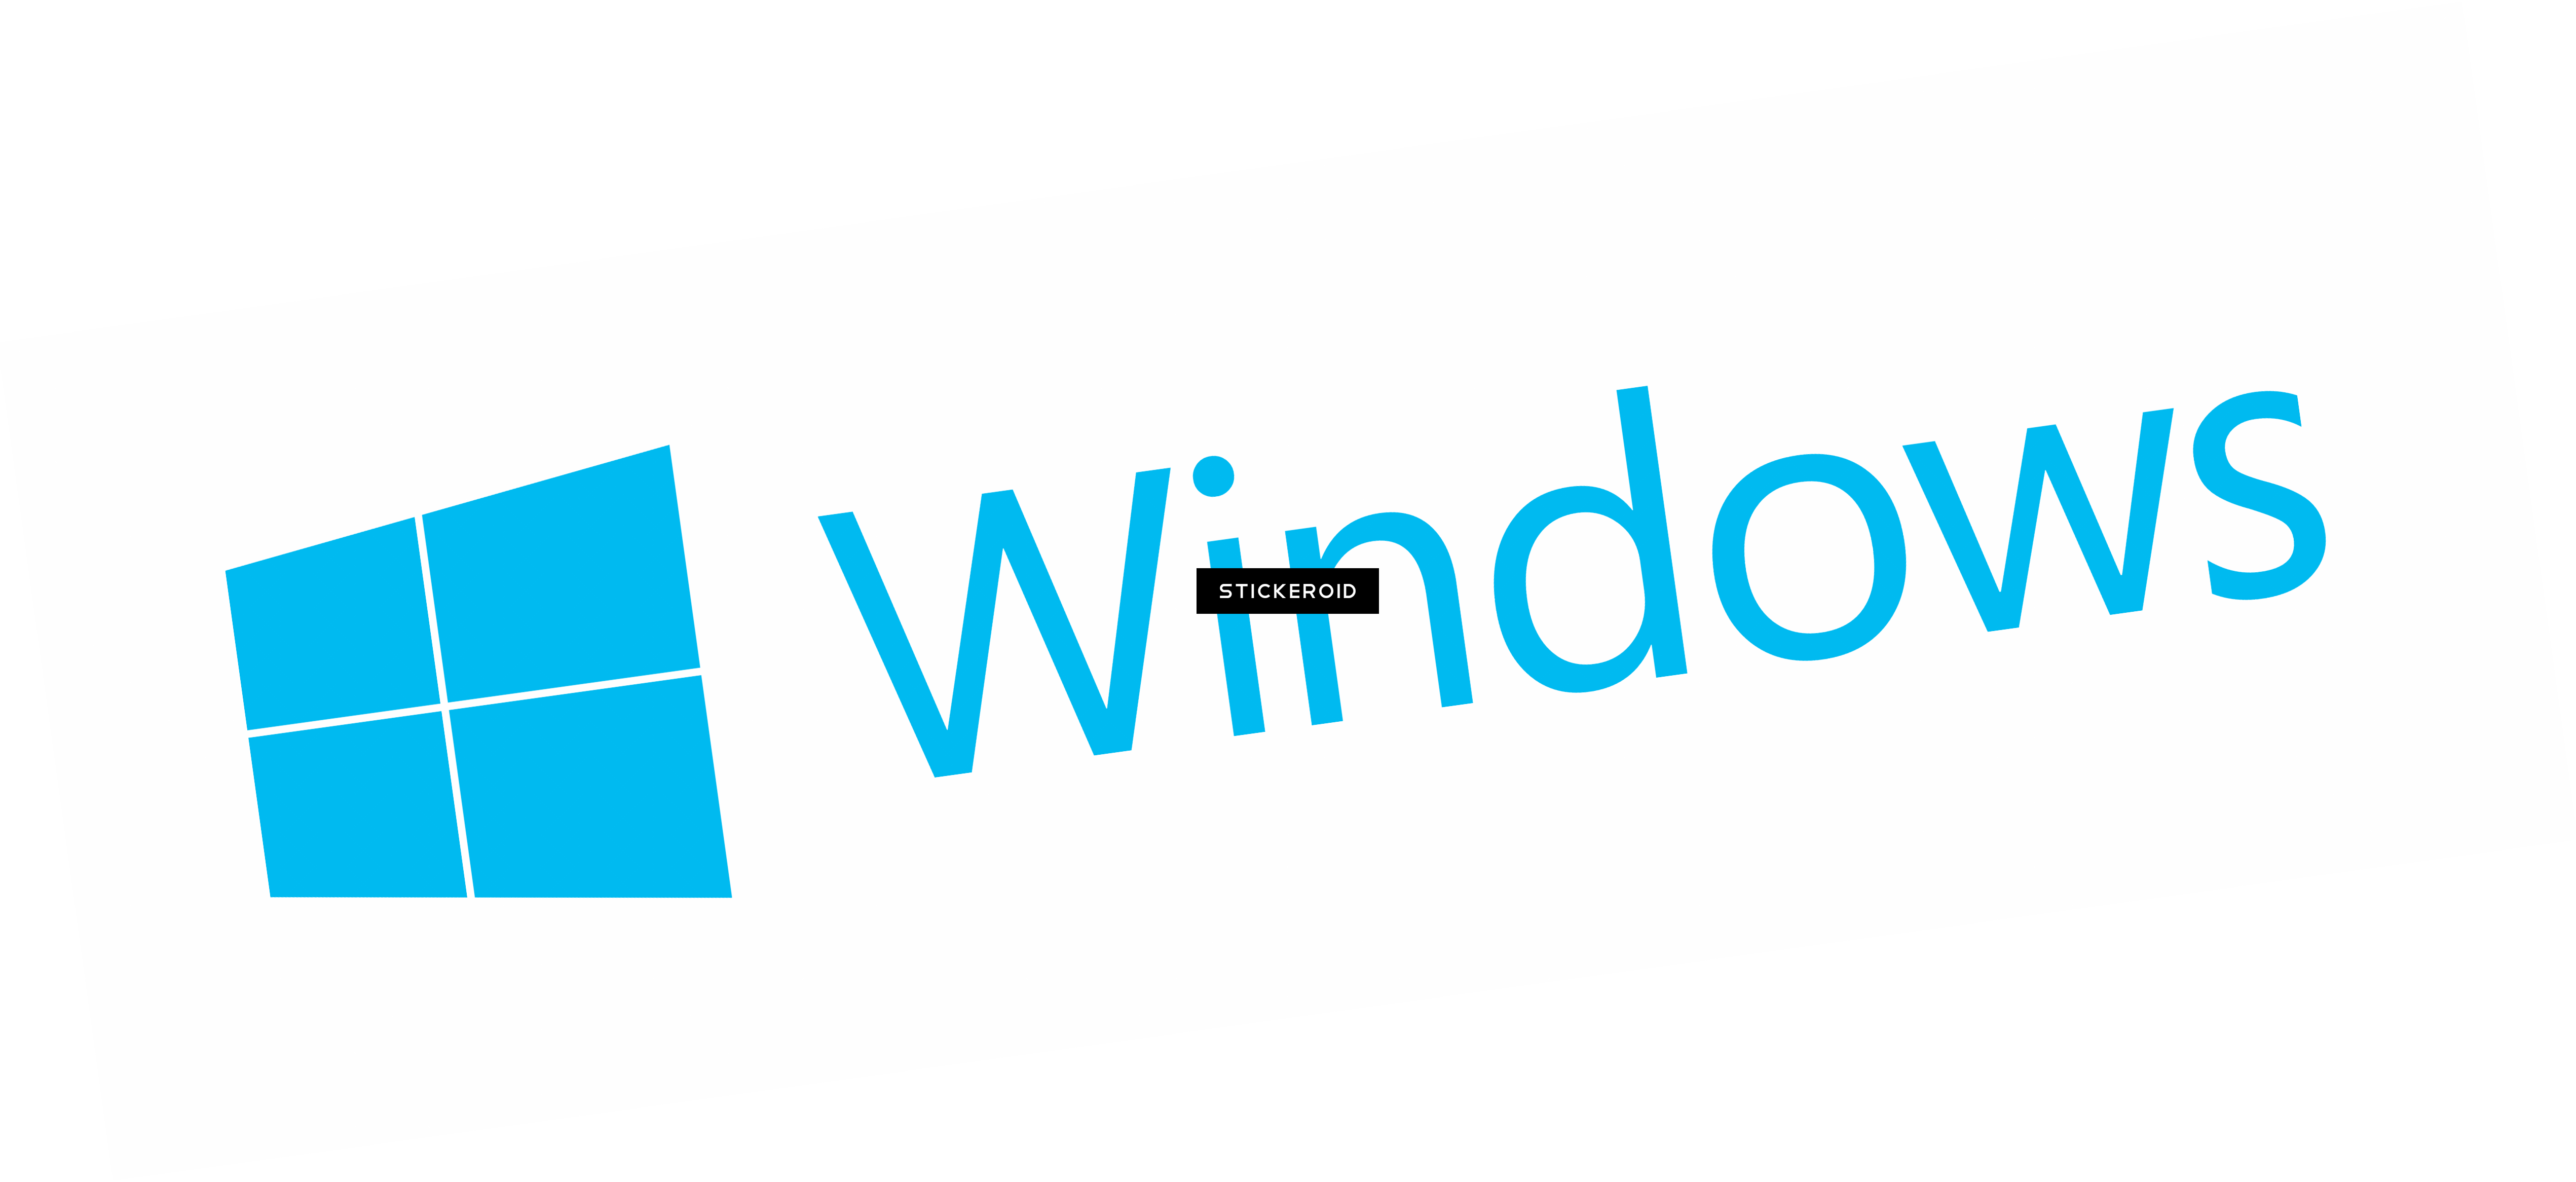 Microsoft Windows - Microsoft Windows (5083x2332)